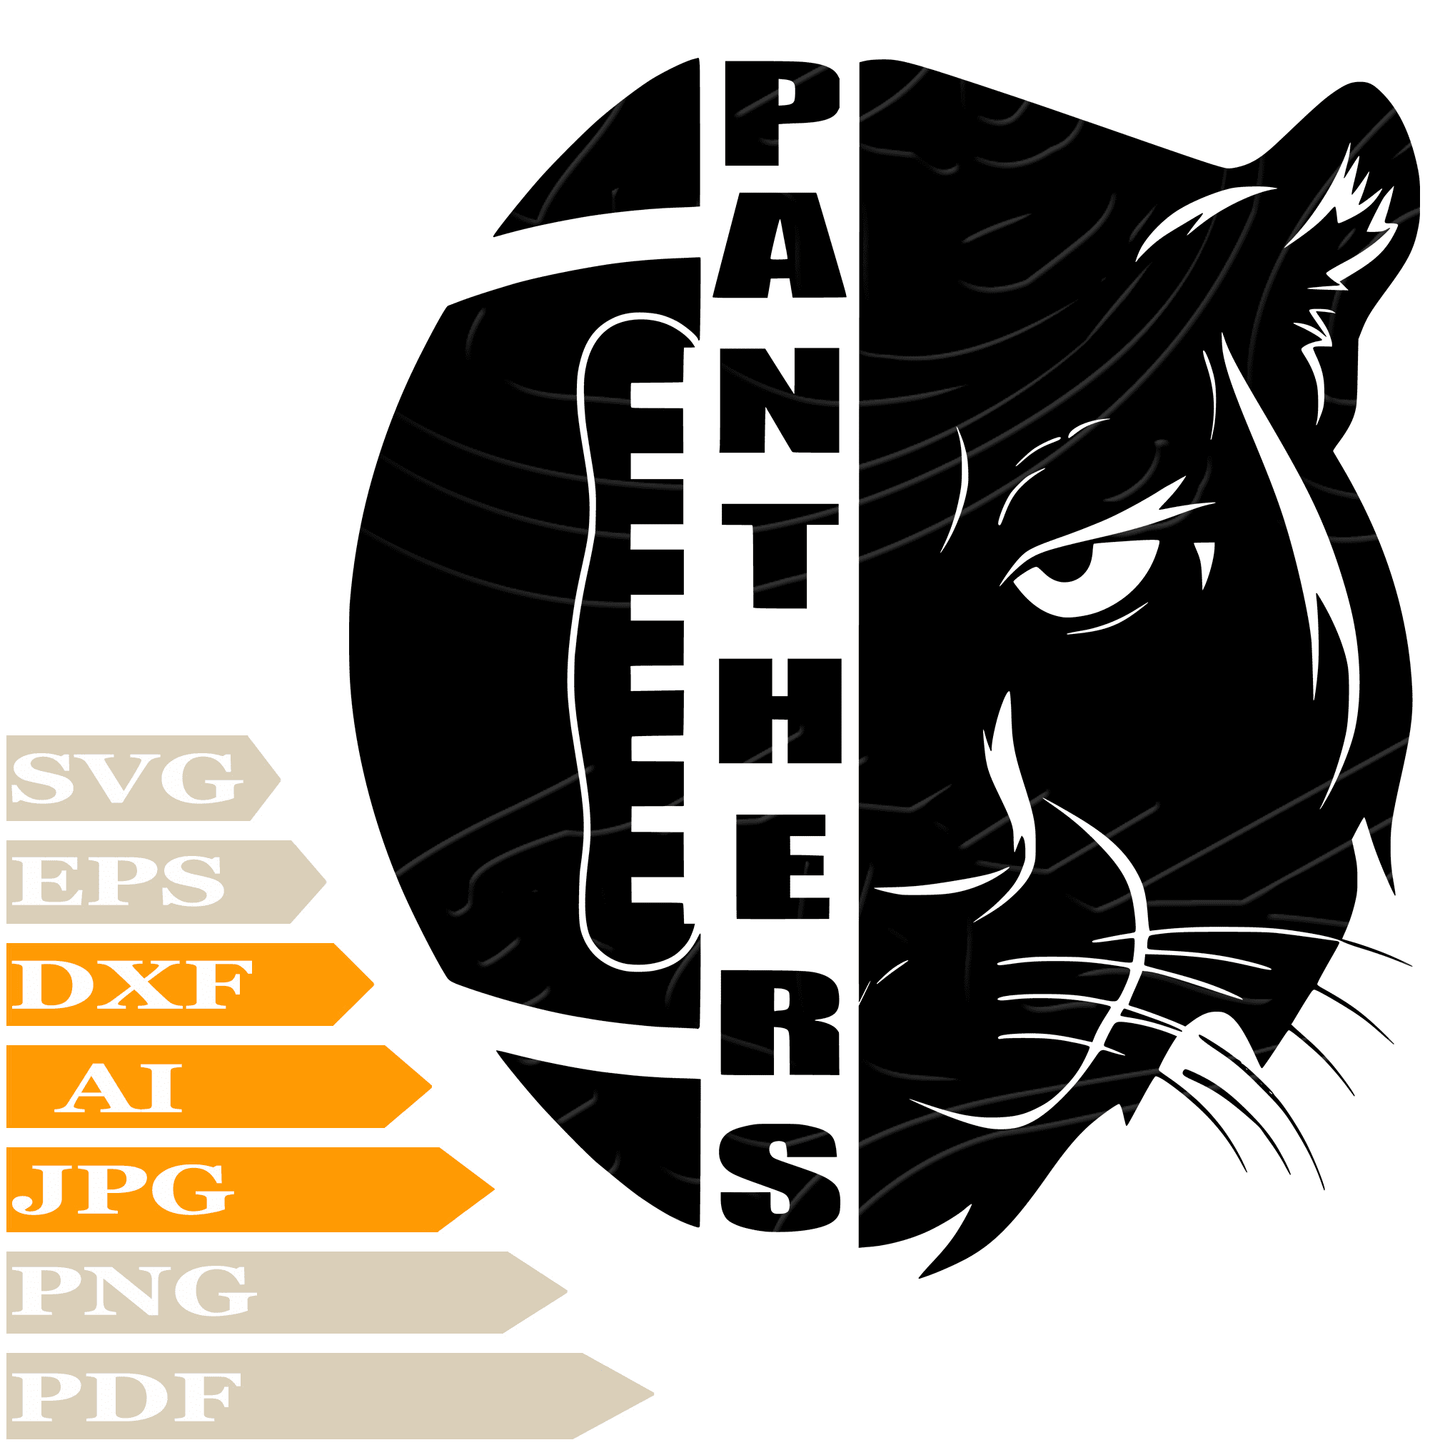 Carolina Panthers SVG-Panthers Football Personalized SVG-Carolina Panthers Mascot Logo Drawing SVG-Panthers Football Logo Vector Illustration-PNG-Decal-Cricut-Digital Files-Clip Art-Cut File-For Shirts-Silhouette